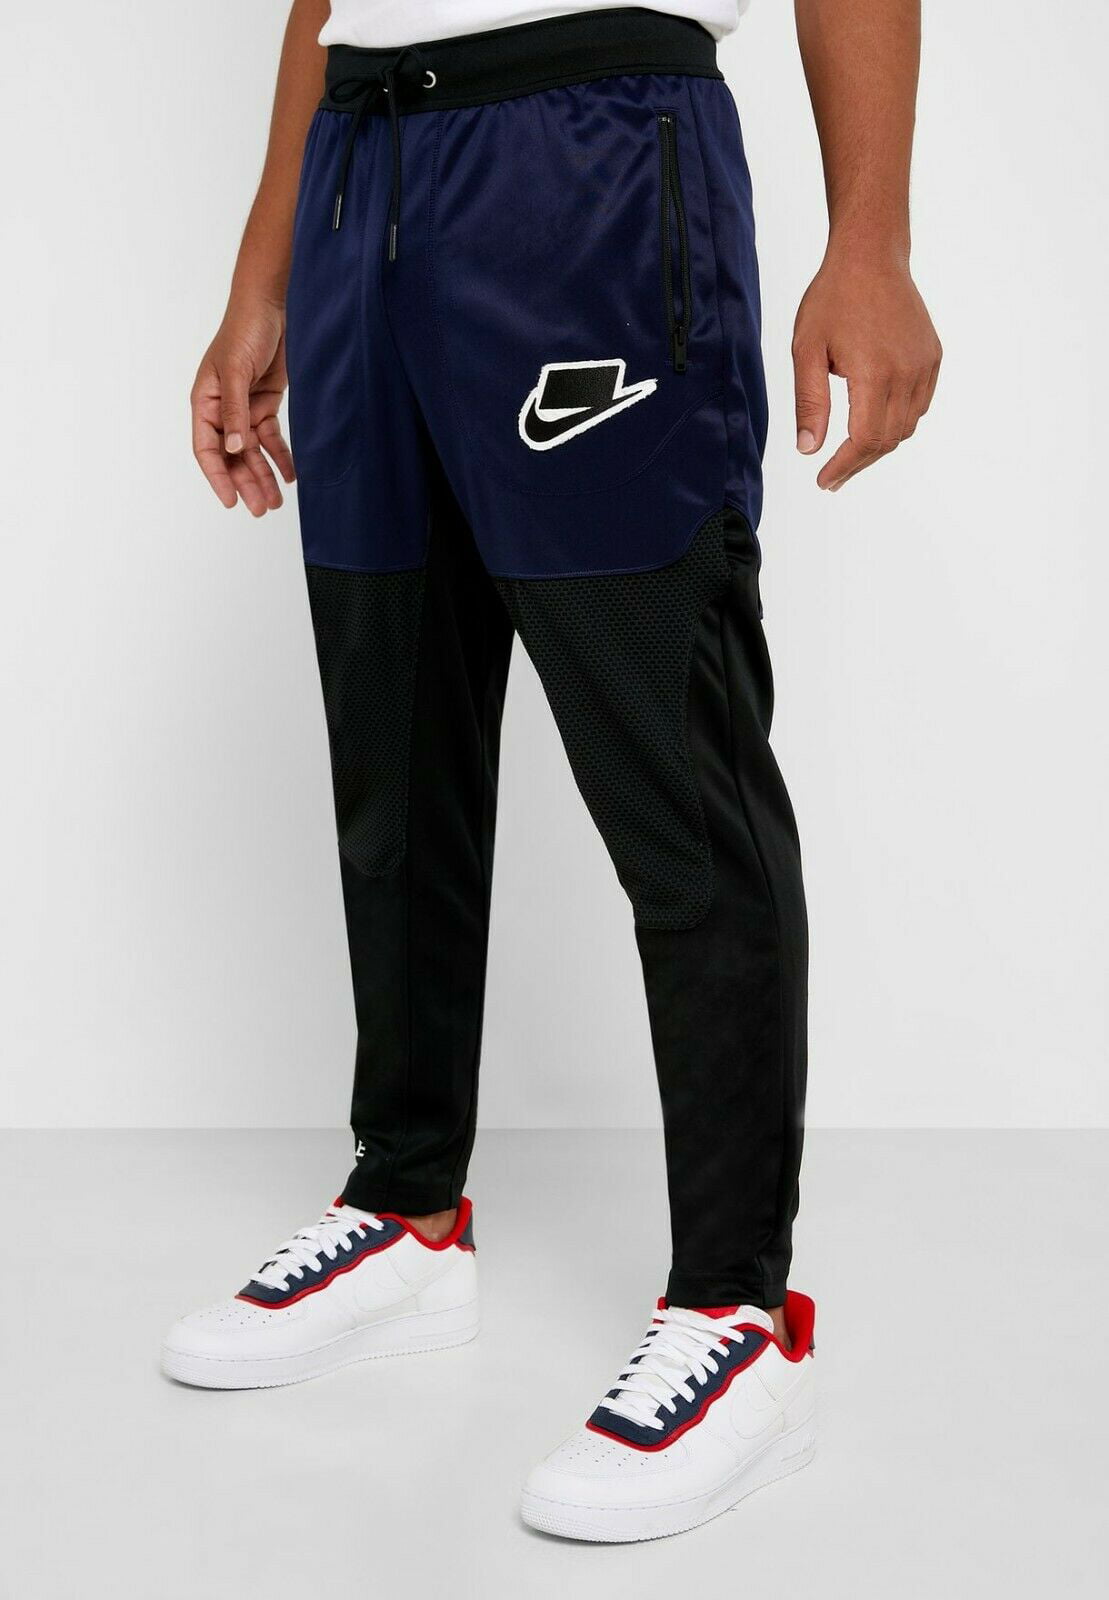 Nike - Nike NSW NSP Black/Blue Men's Loose Fit Track Pants Size XL ...